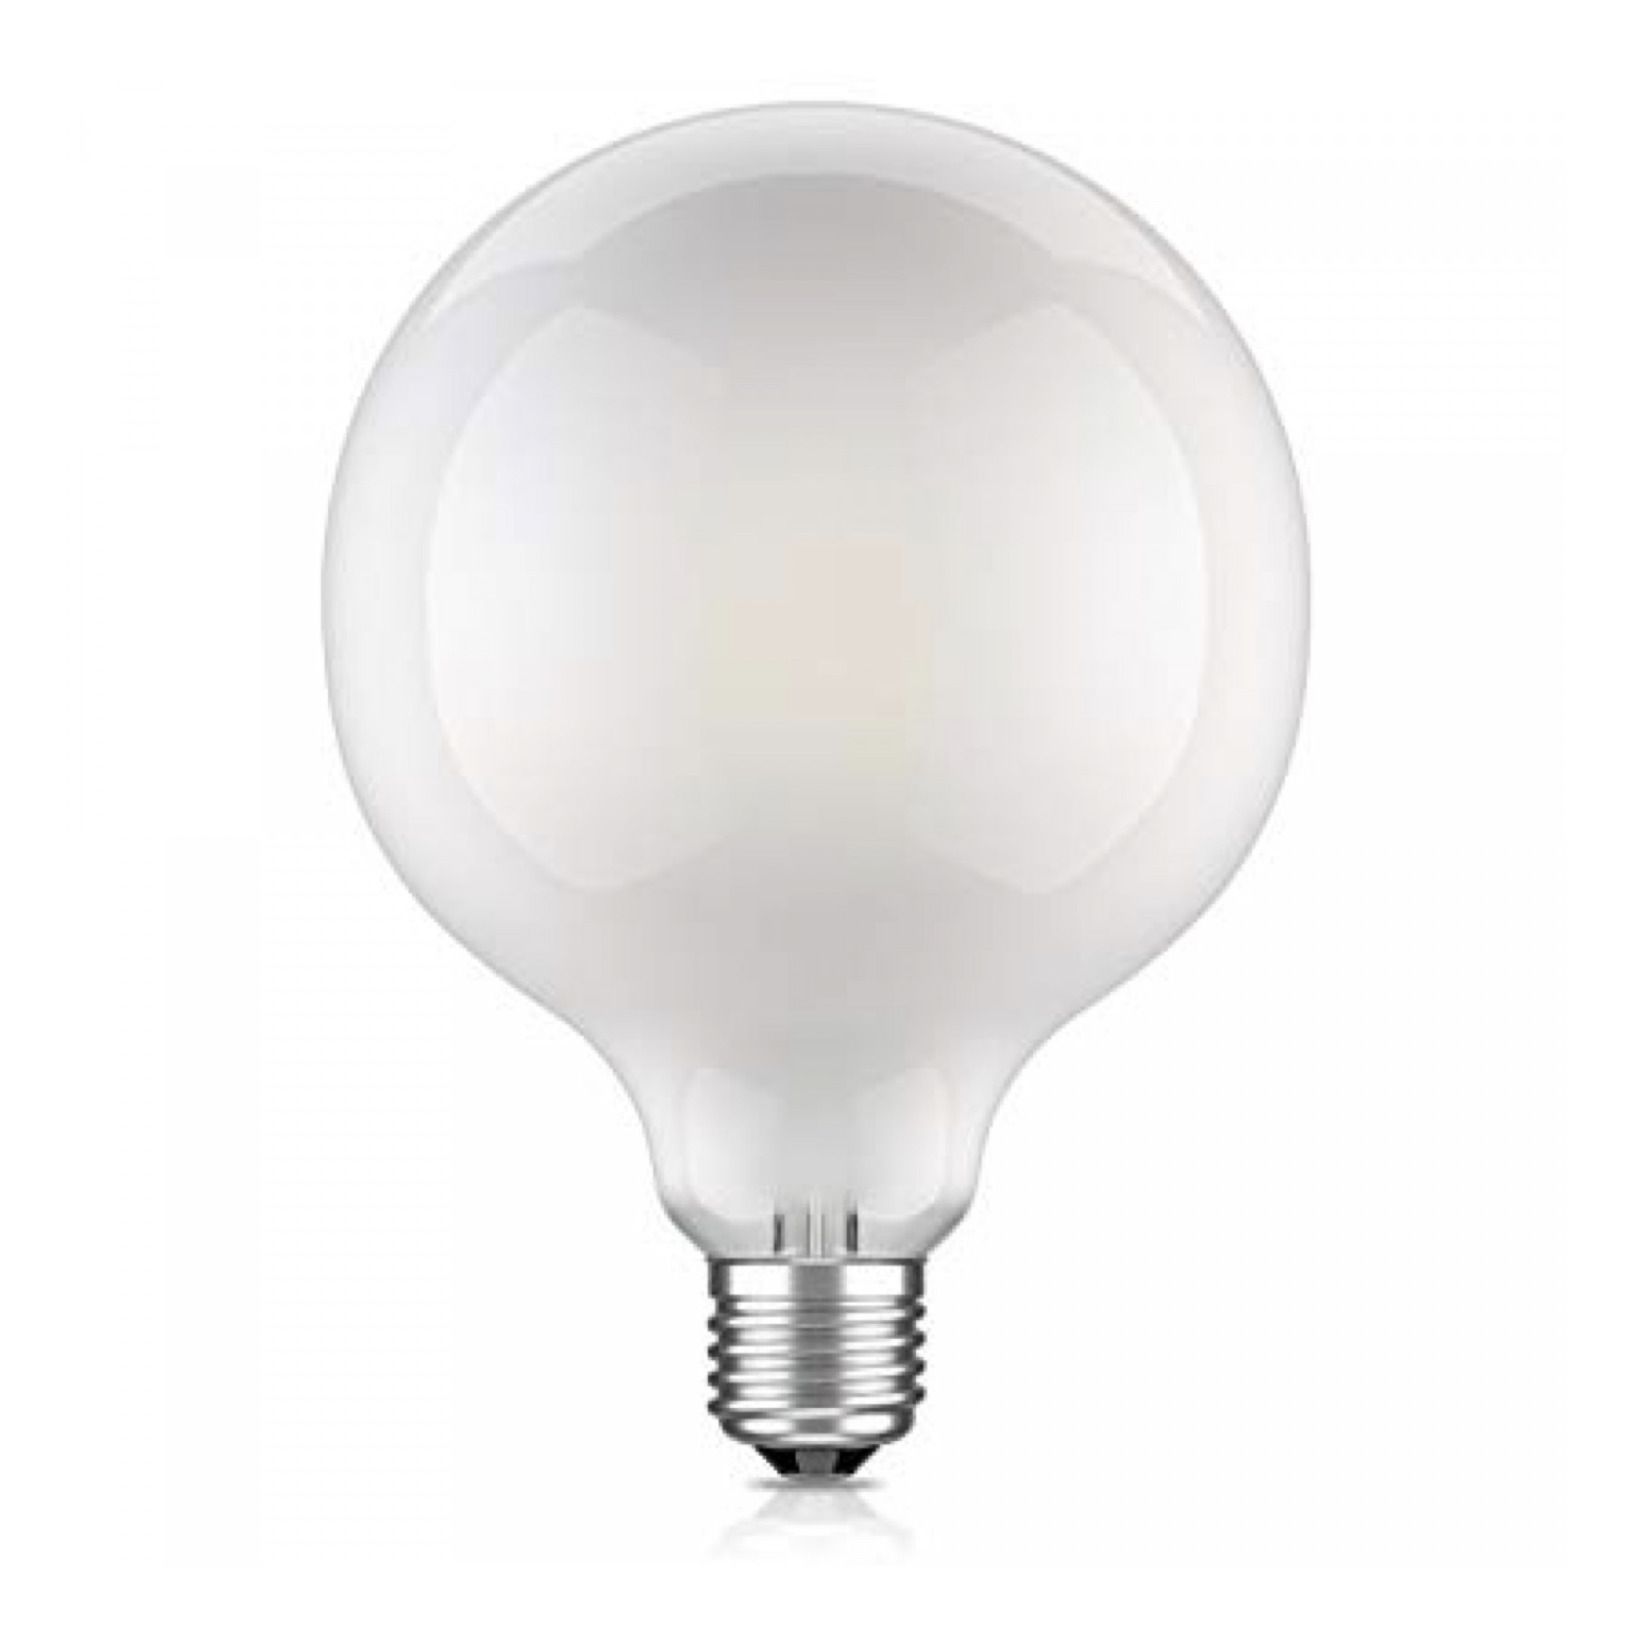 Opjet - Ampoule LED Globe 4w - Blanc